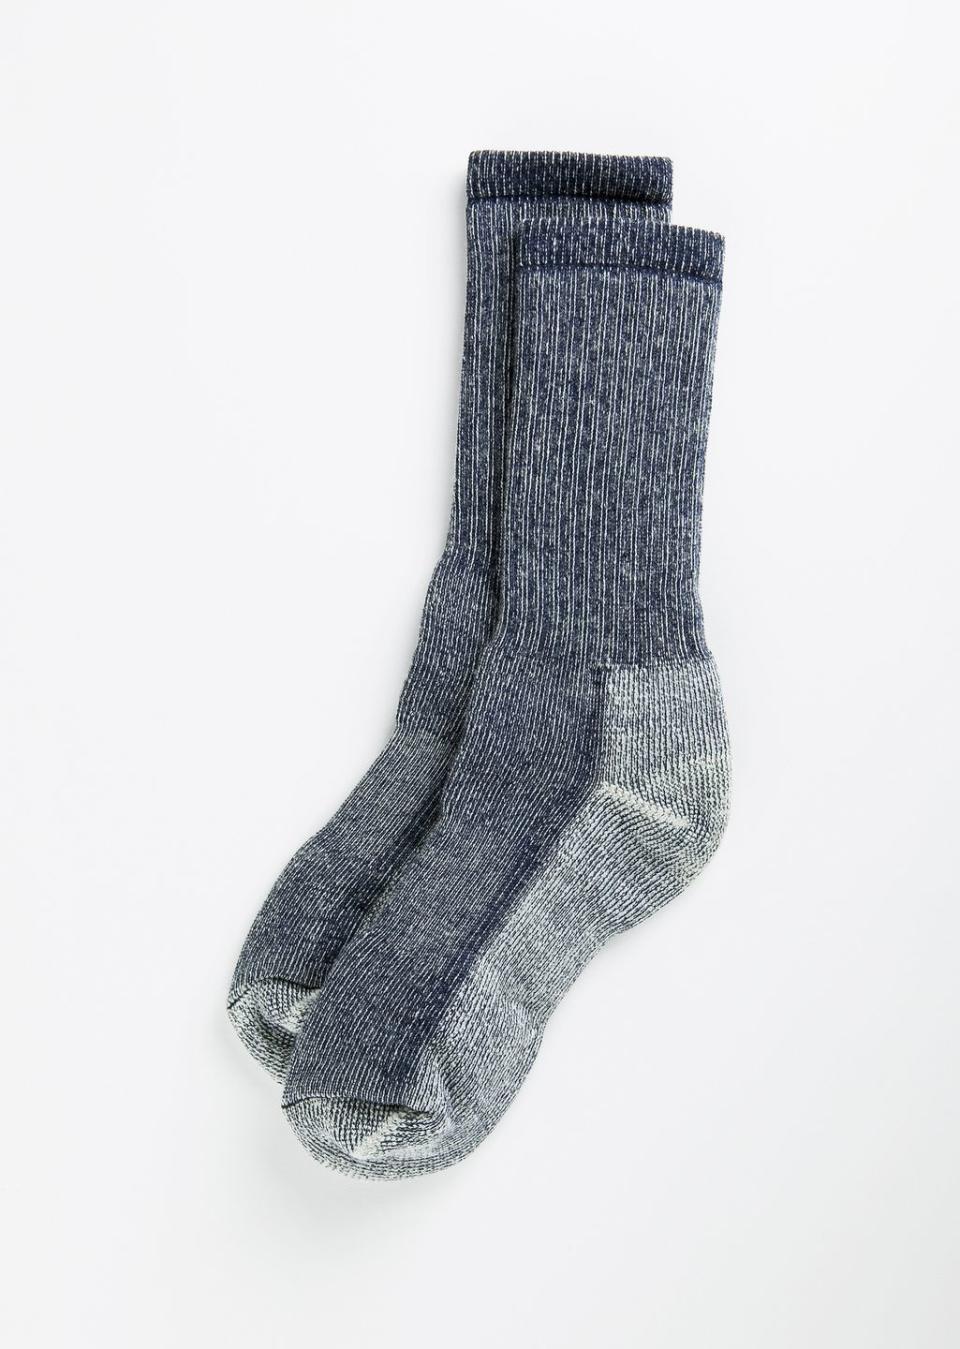 BEFORE: Old Socks